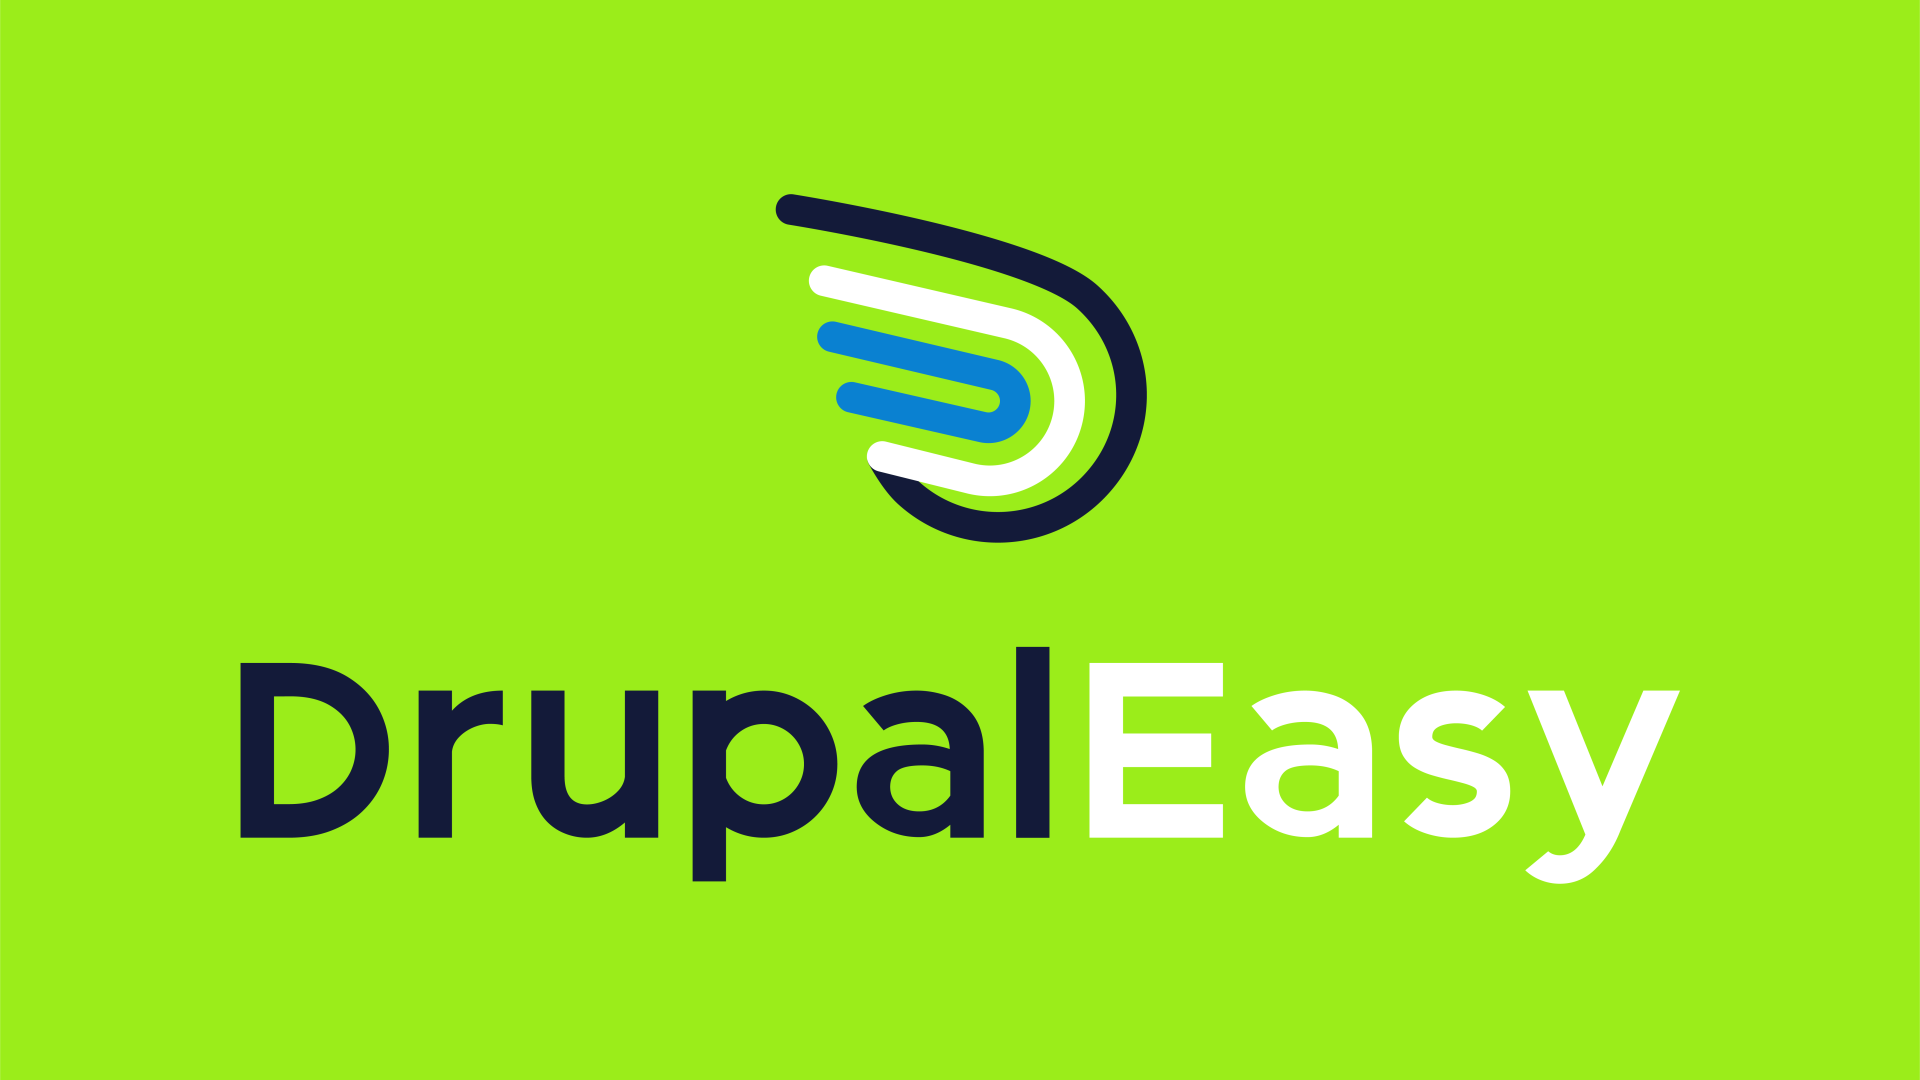 DrupalEasy logo